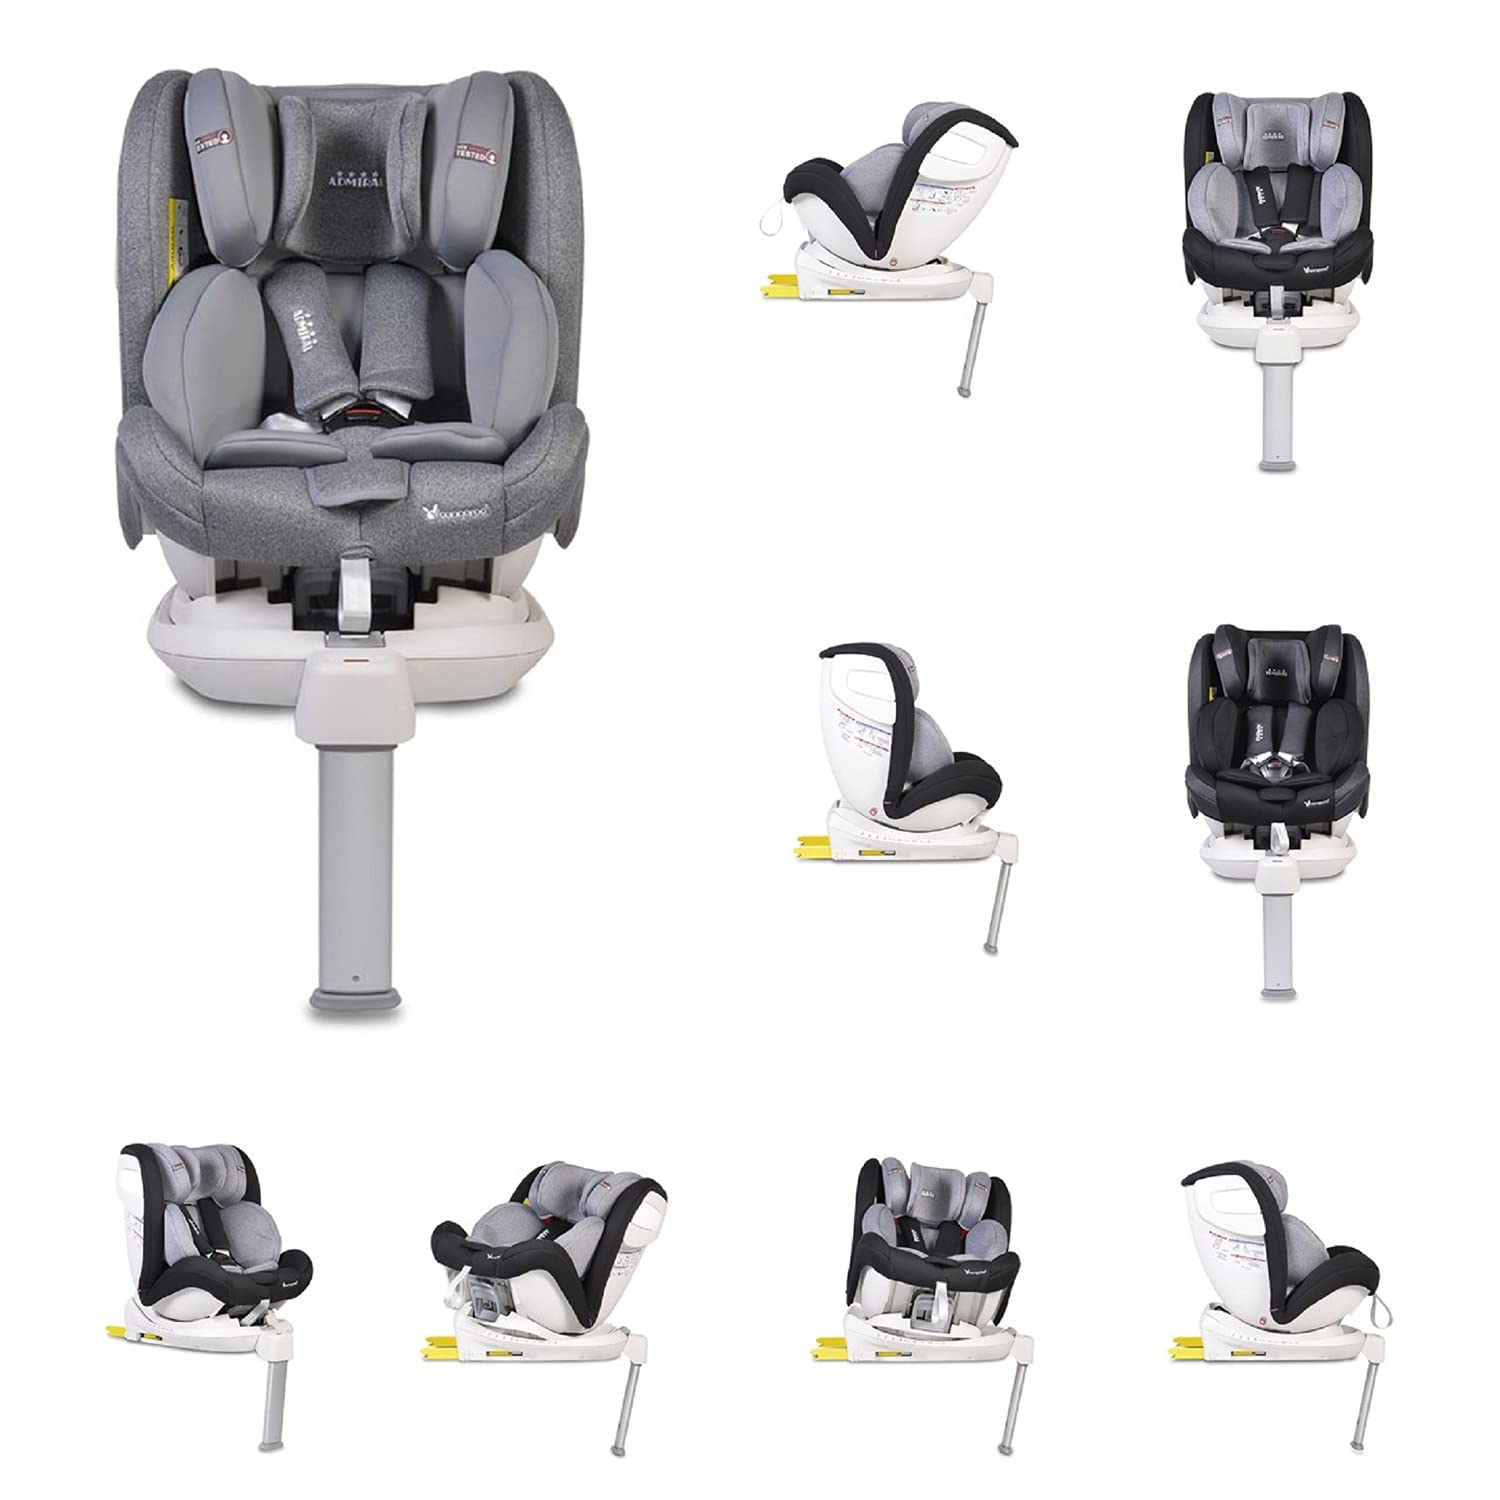 Cangaroo Admiral ISOFIX Child Seat Group 0/1/2/3 (0-36 kg) Rotatable Adjustable Light Grey